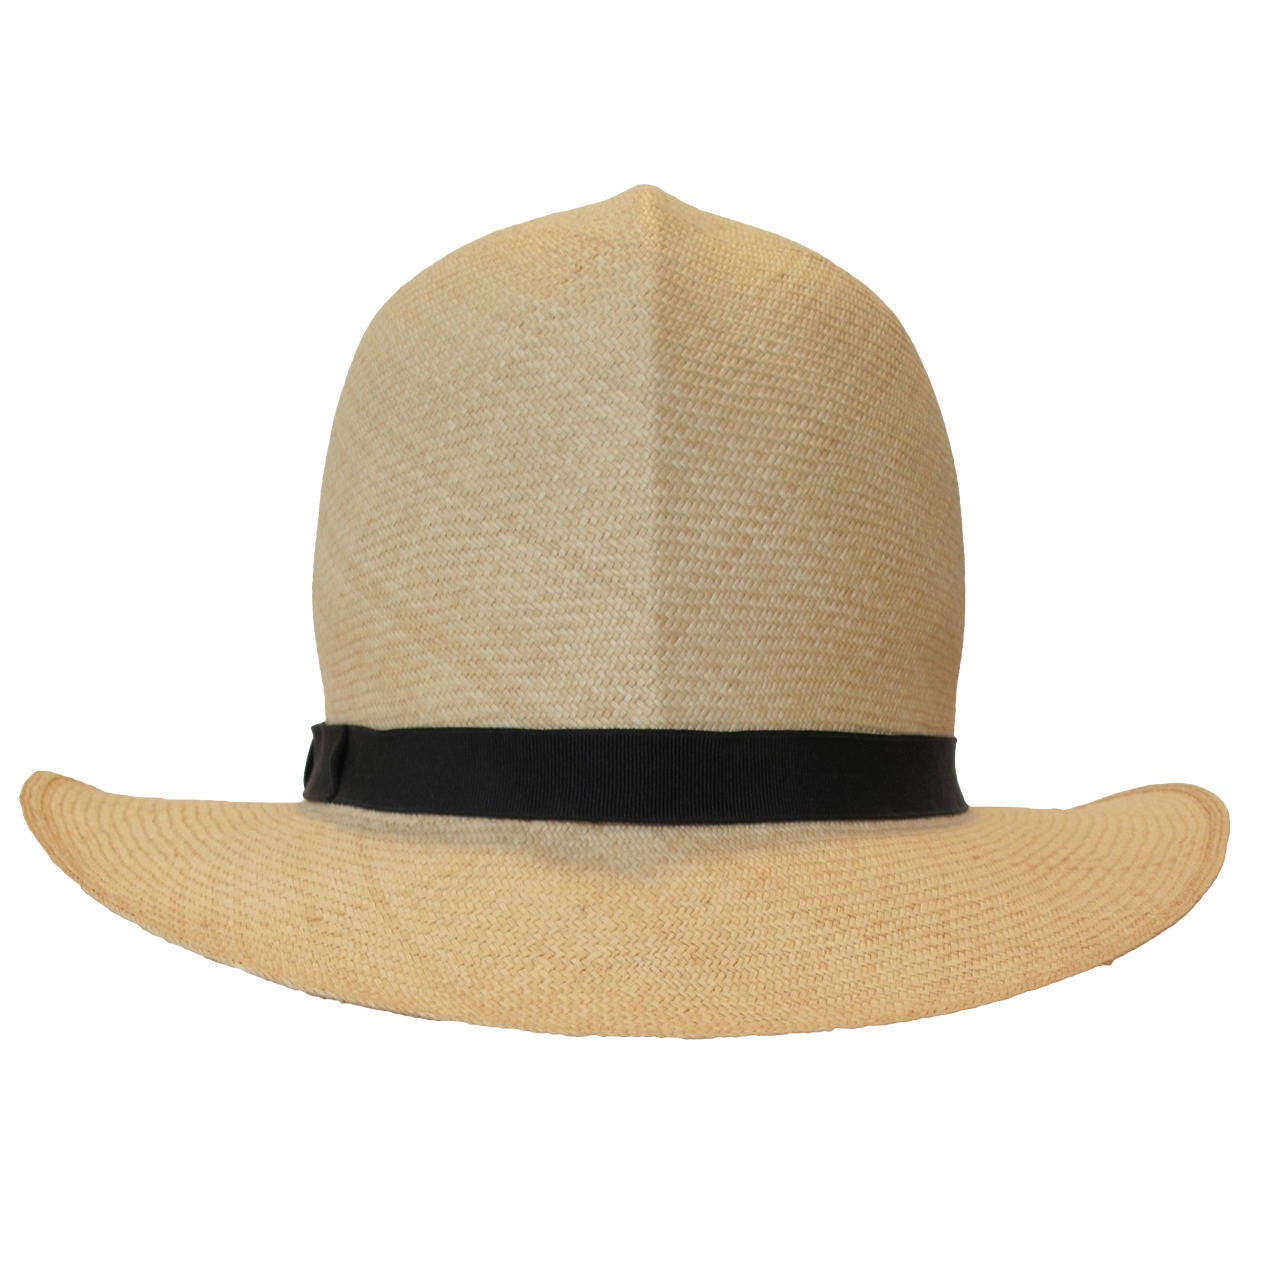 Classic Giorgio Armani Woven Panama "Helmet" Style Straw Hat